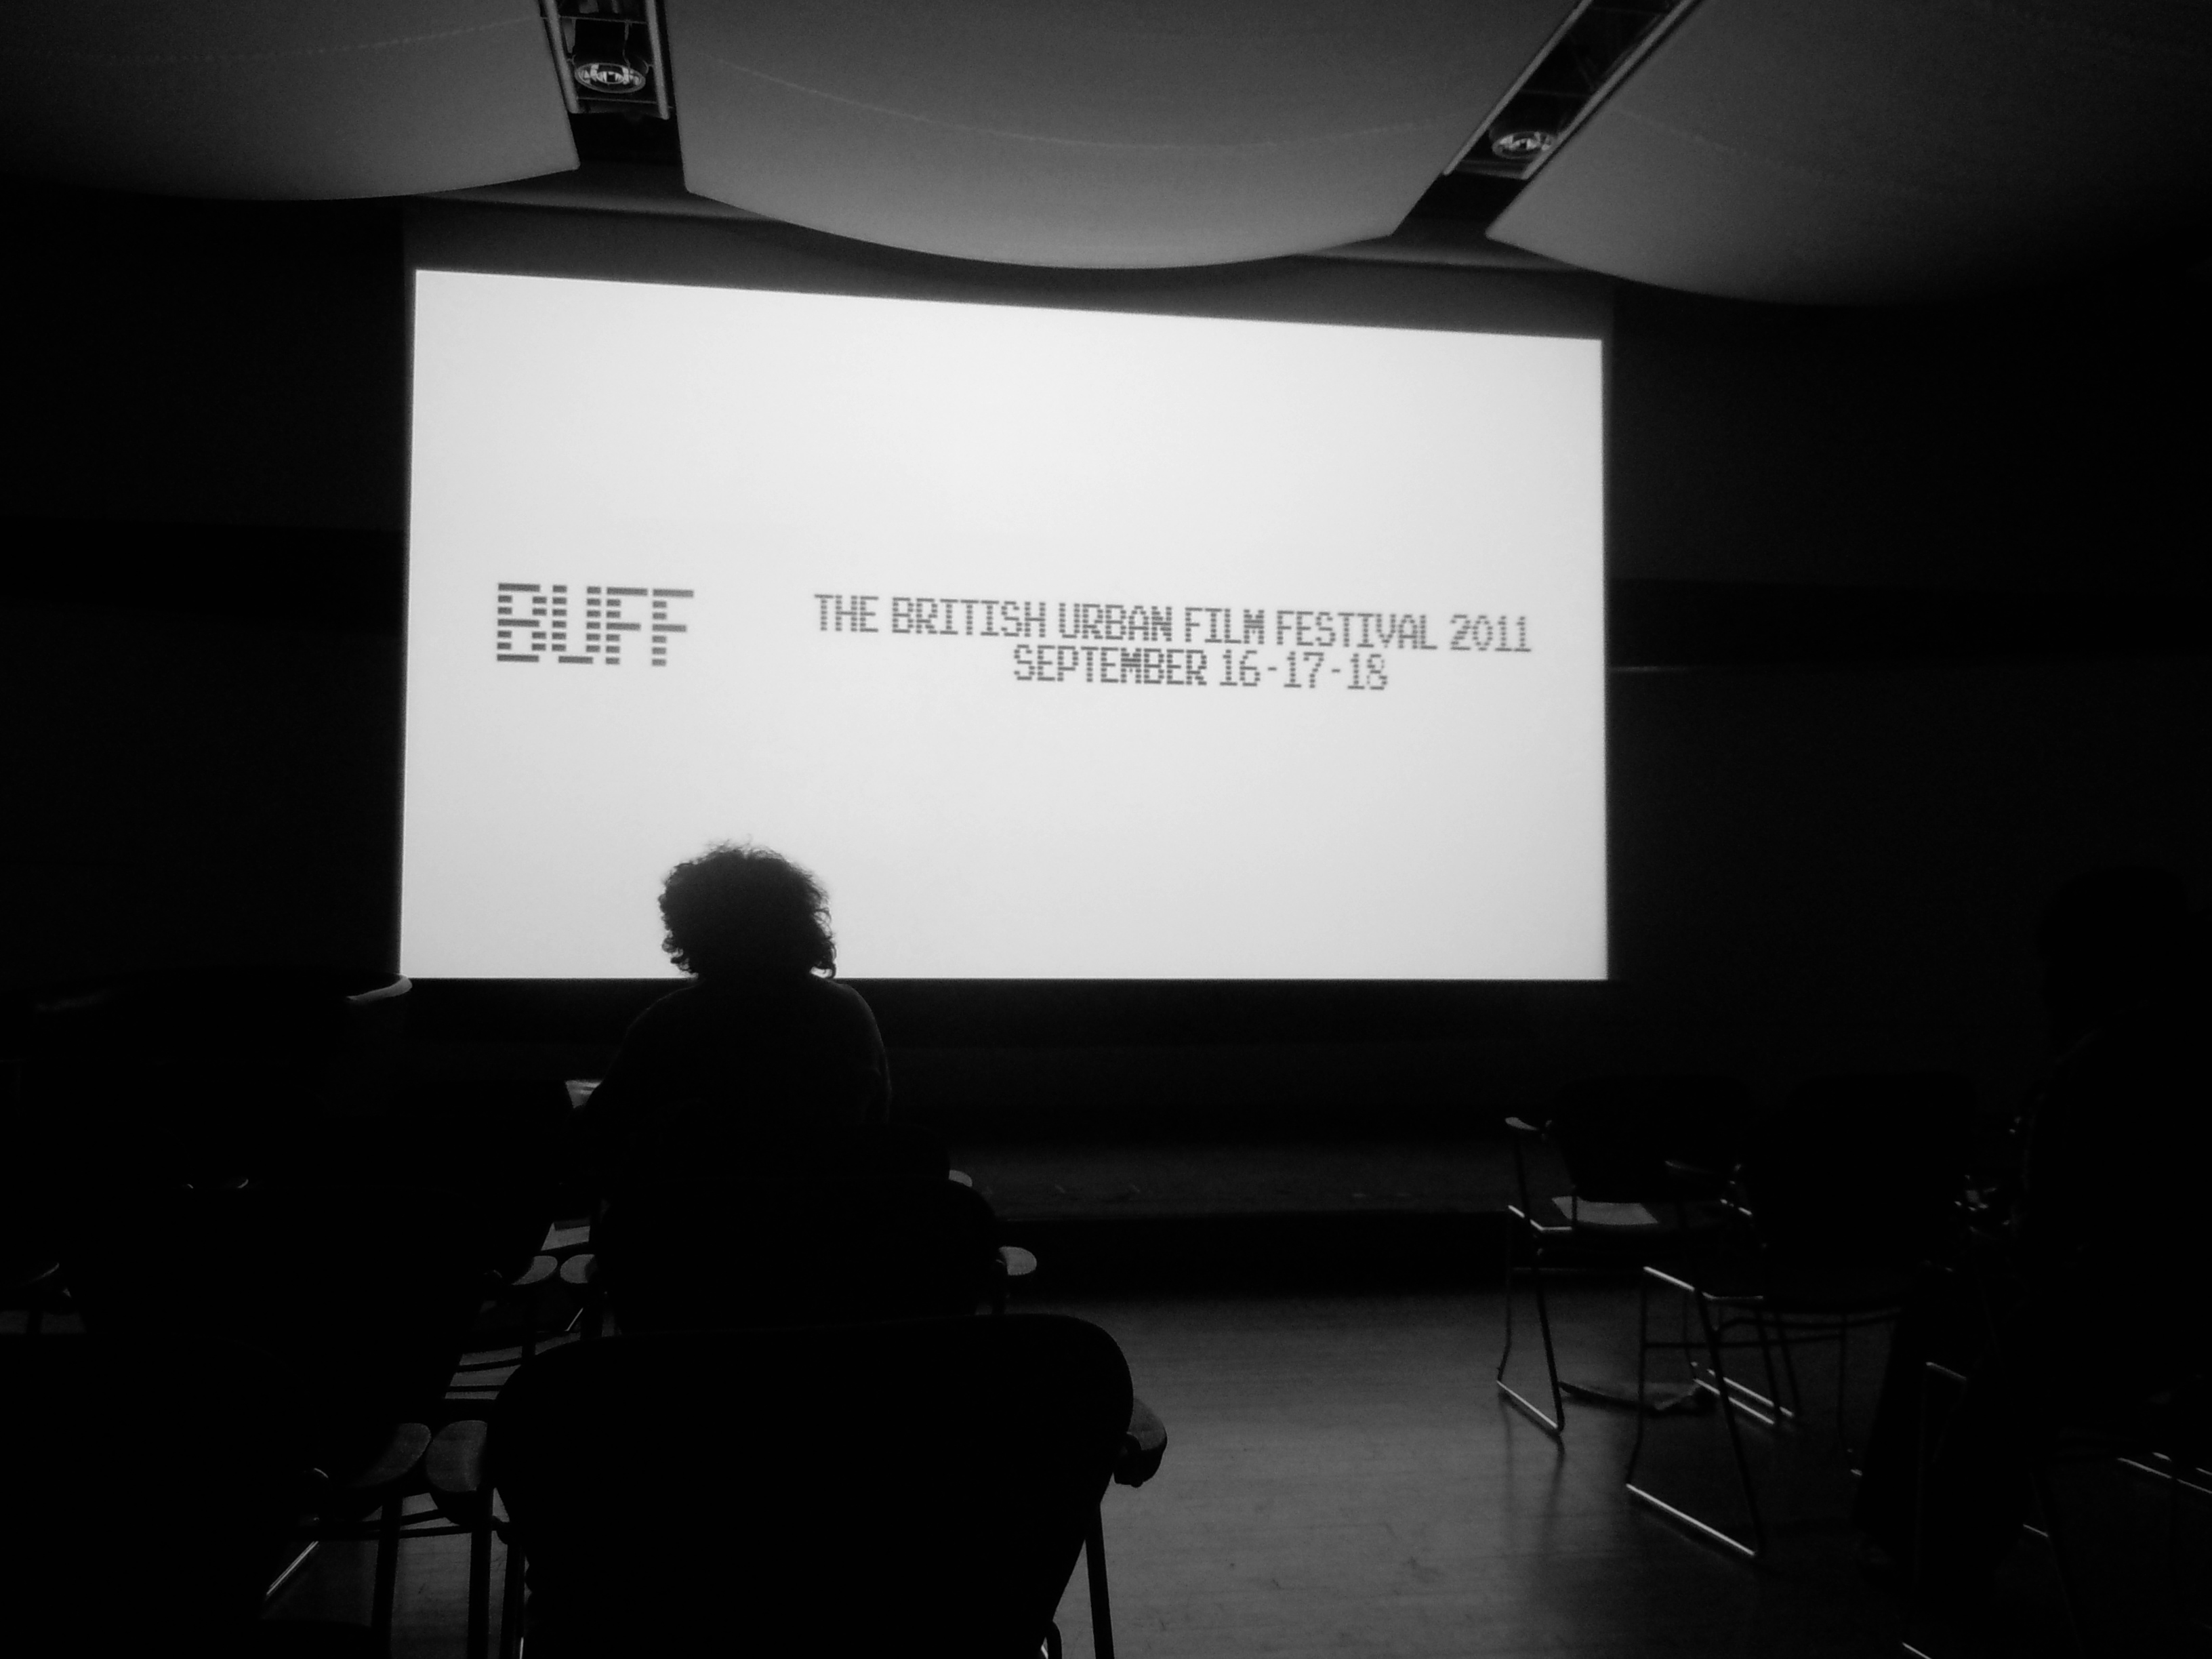 [Review] The British Urban Film Festival 2011